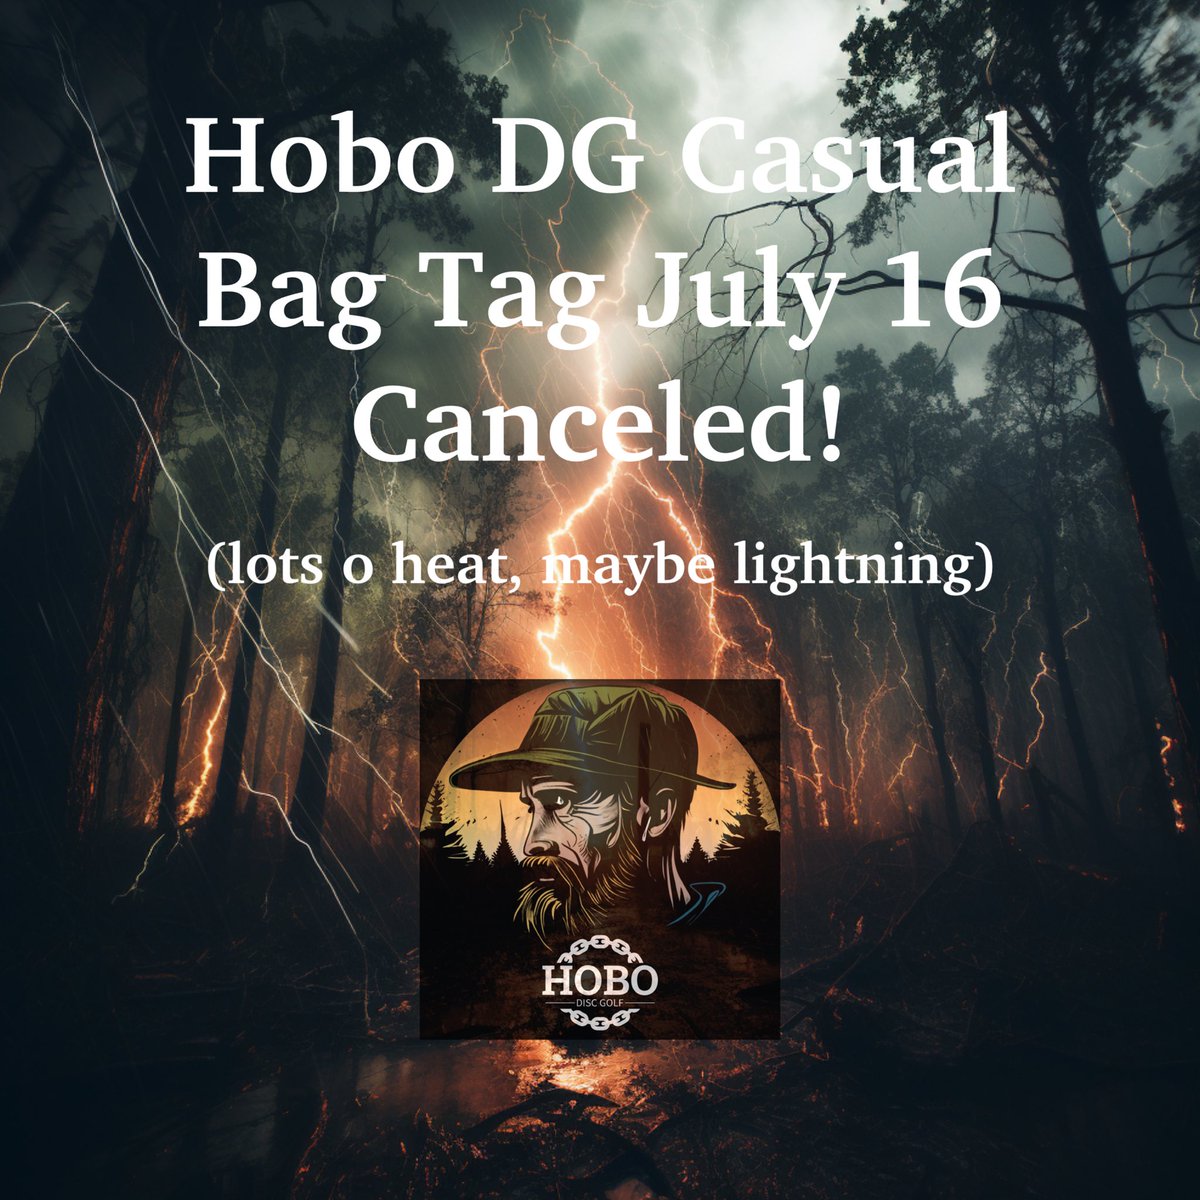 #BagTags #HoboDG #Canceled #SadButTrue #Hot #DamnHot #WereYouBornOnTheSun